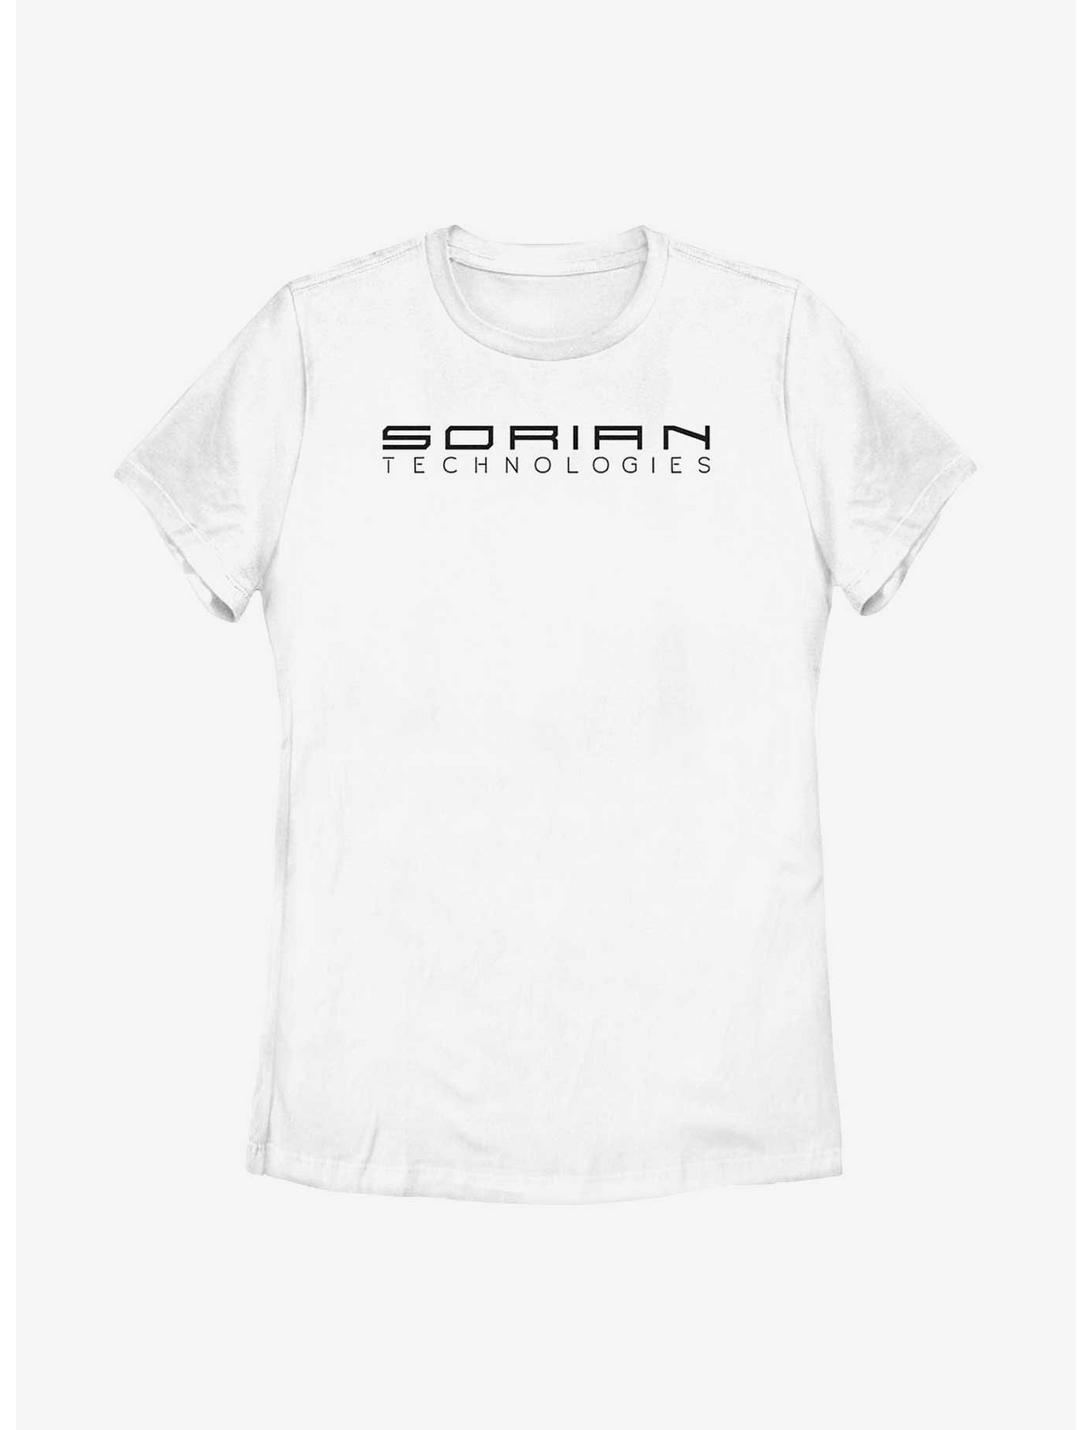 The Adam Project Sorian Technologies Logo Womens T-Shirt, WHITE, hi-res